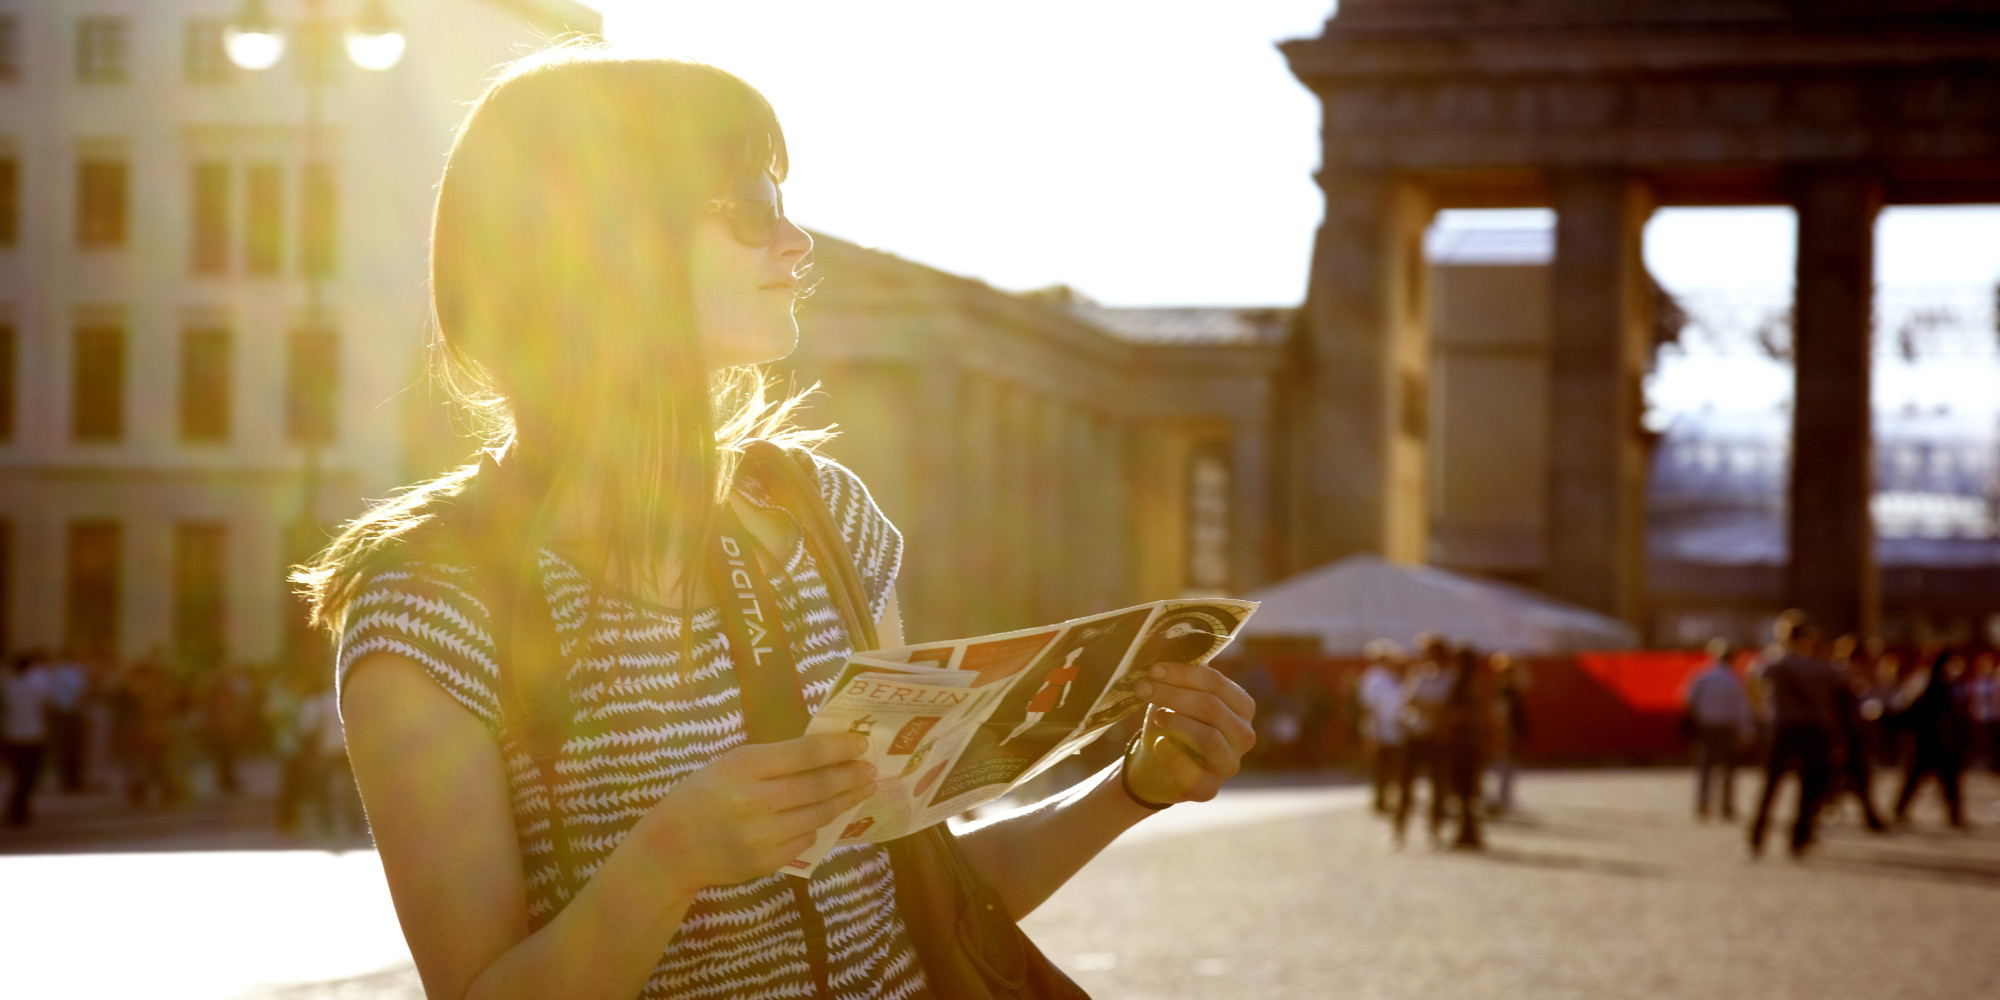 Girl with map at Brandenburger Tor